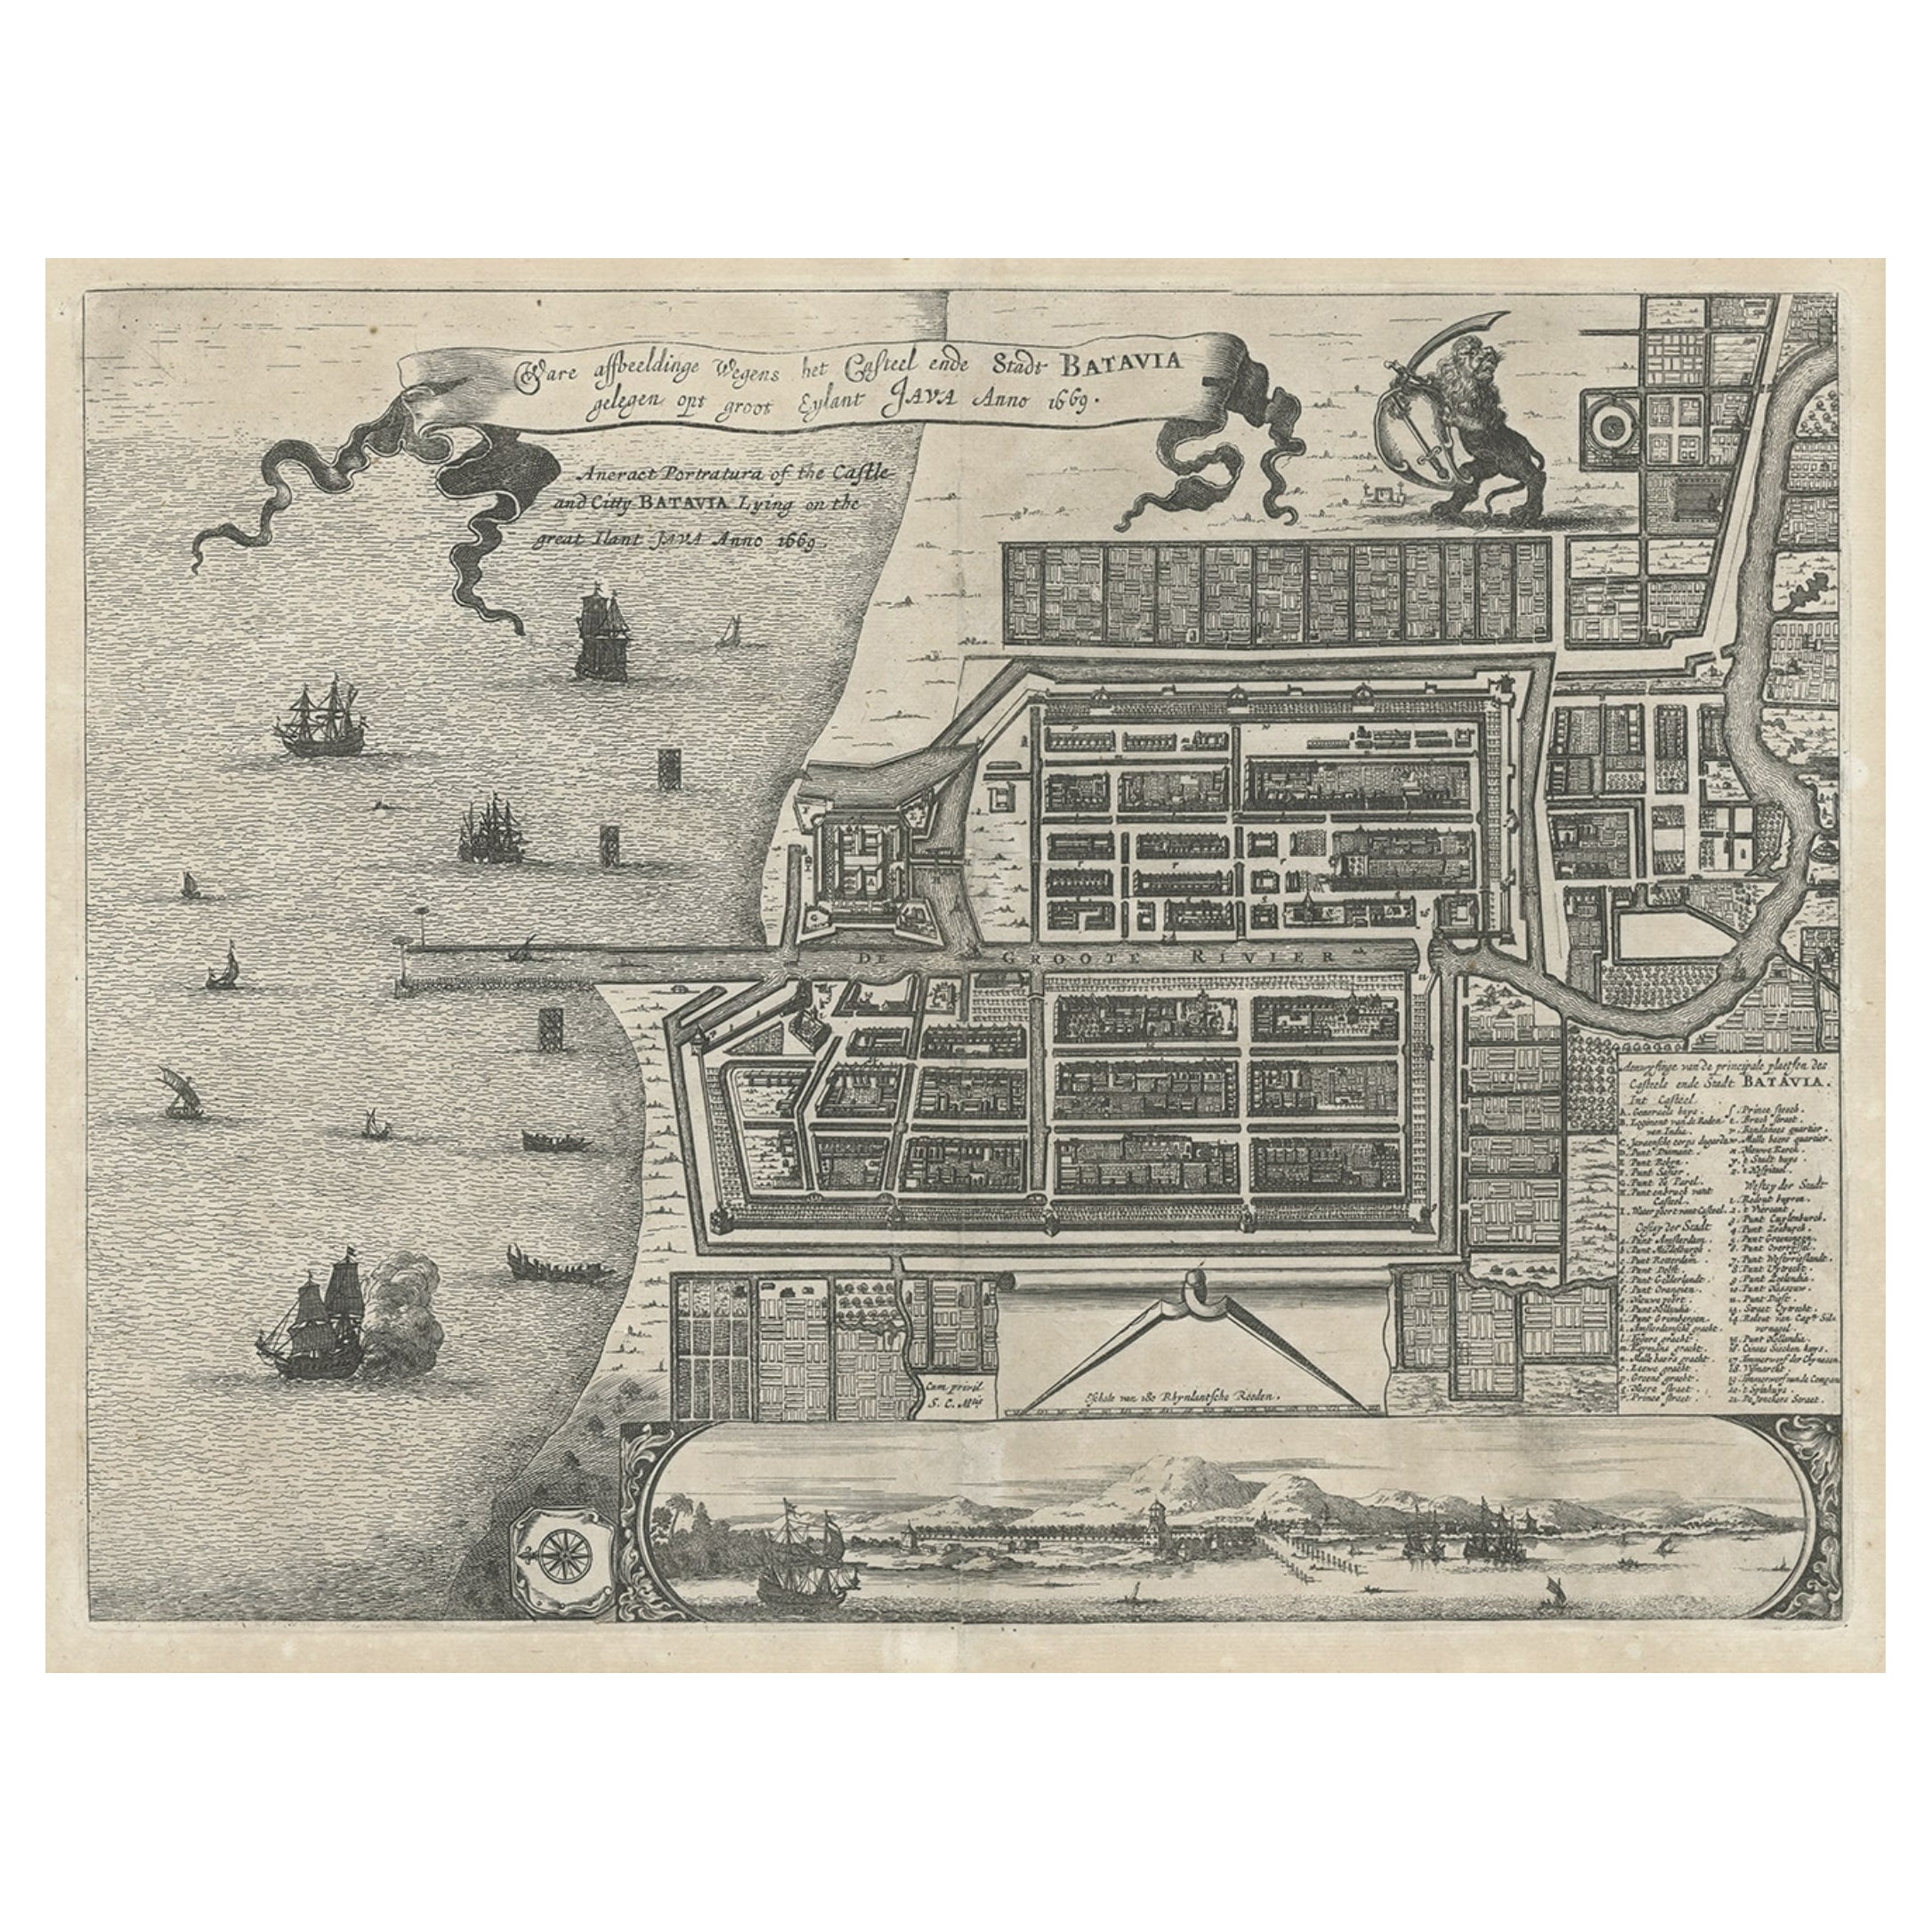 Antique Plan of the Castle & City of Batavia 'Jakarta' on Java, Indonesia, c1669